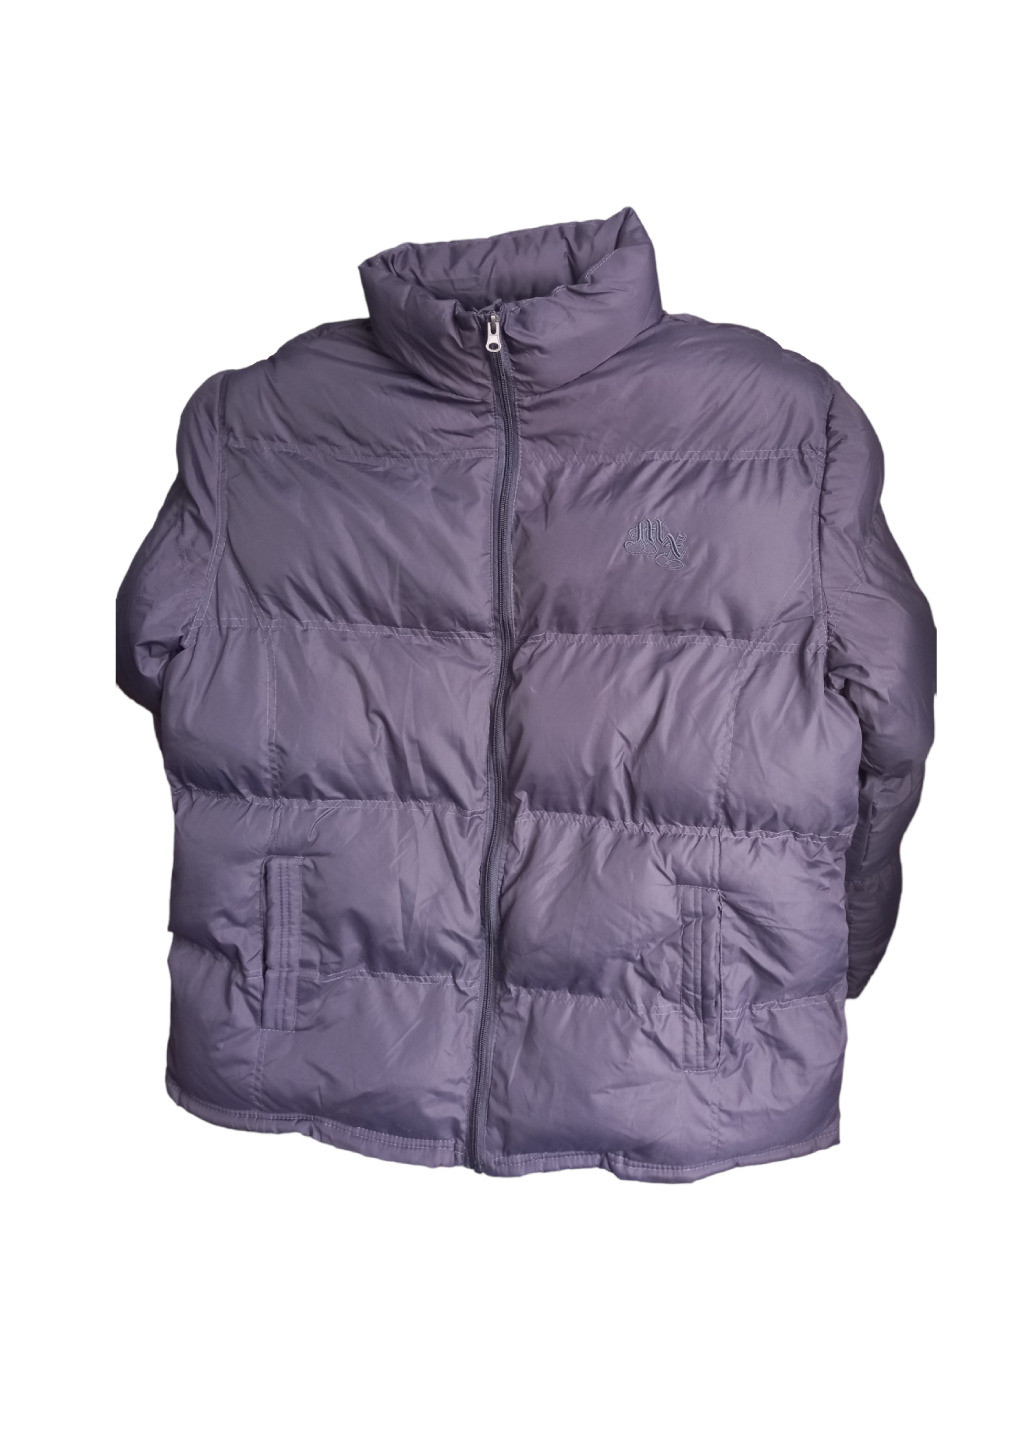 Темно-фіолетова демісезонна фірмова куртка max's, нова, синтепон No Brand